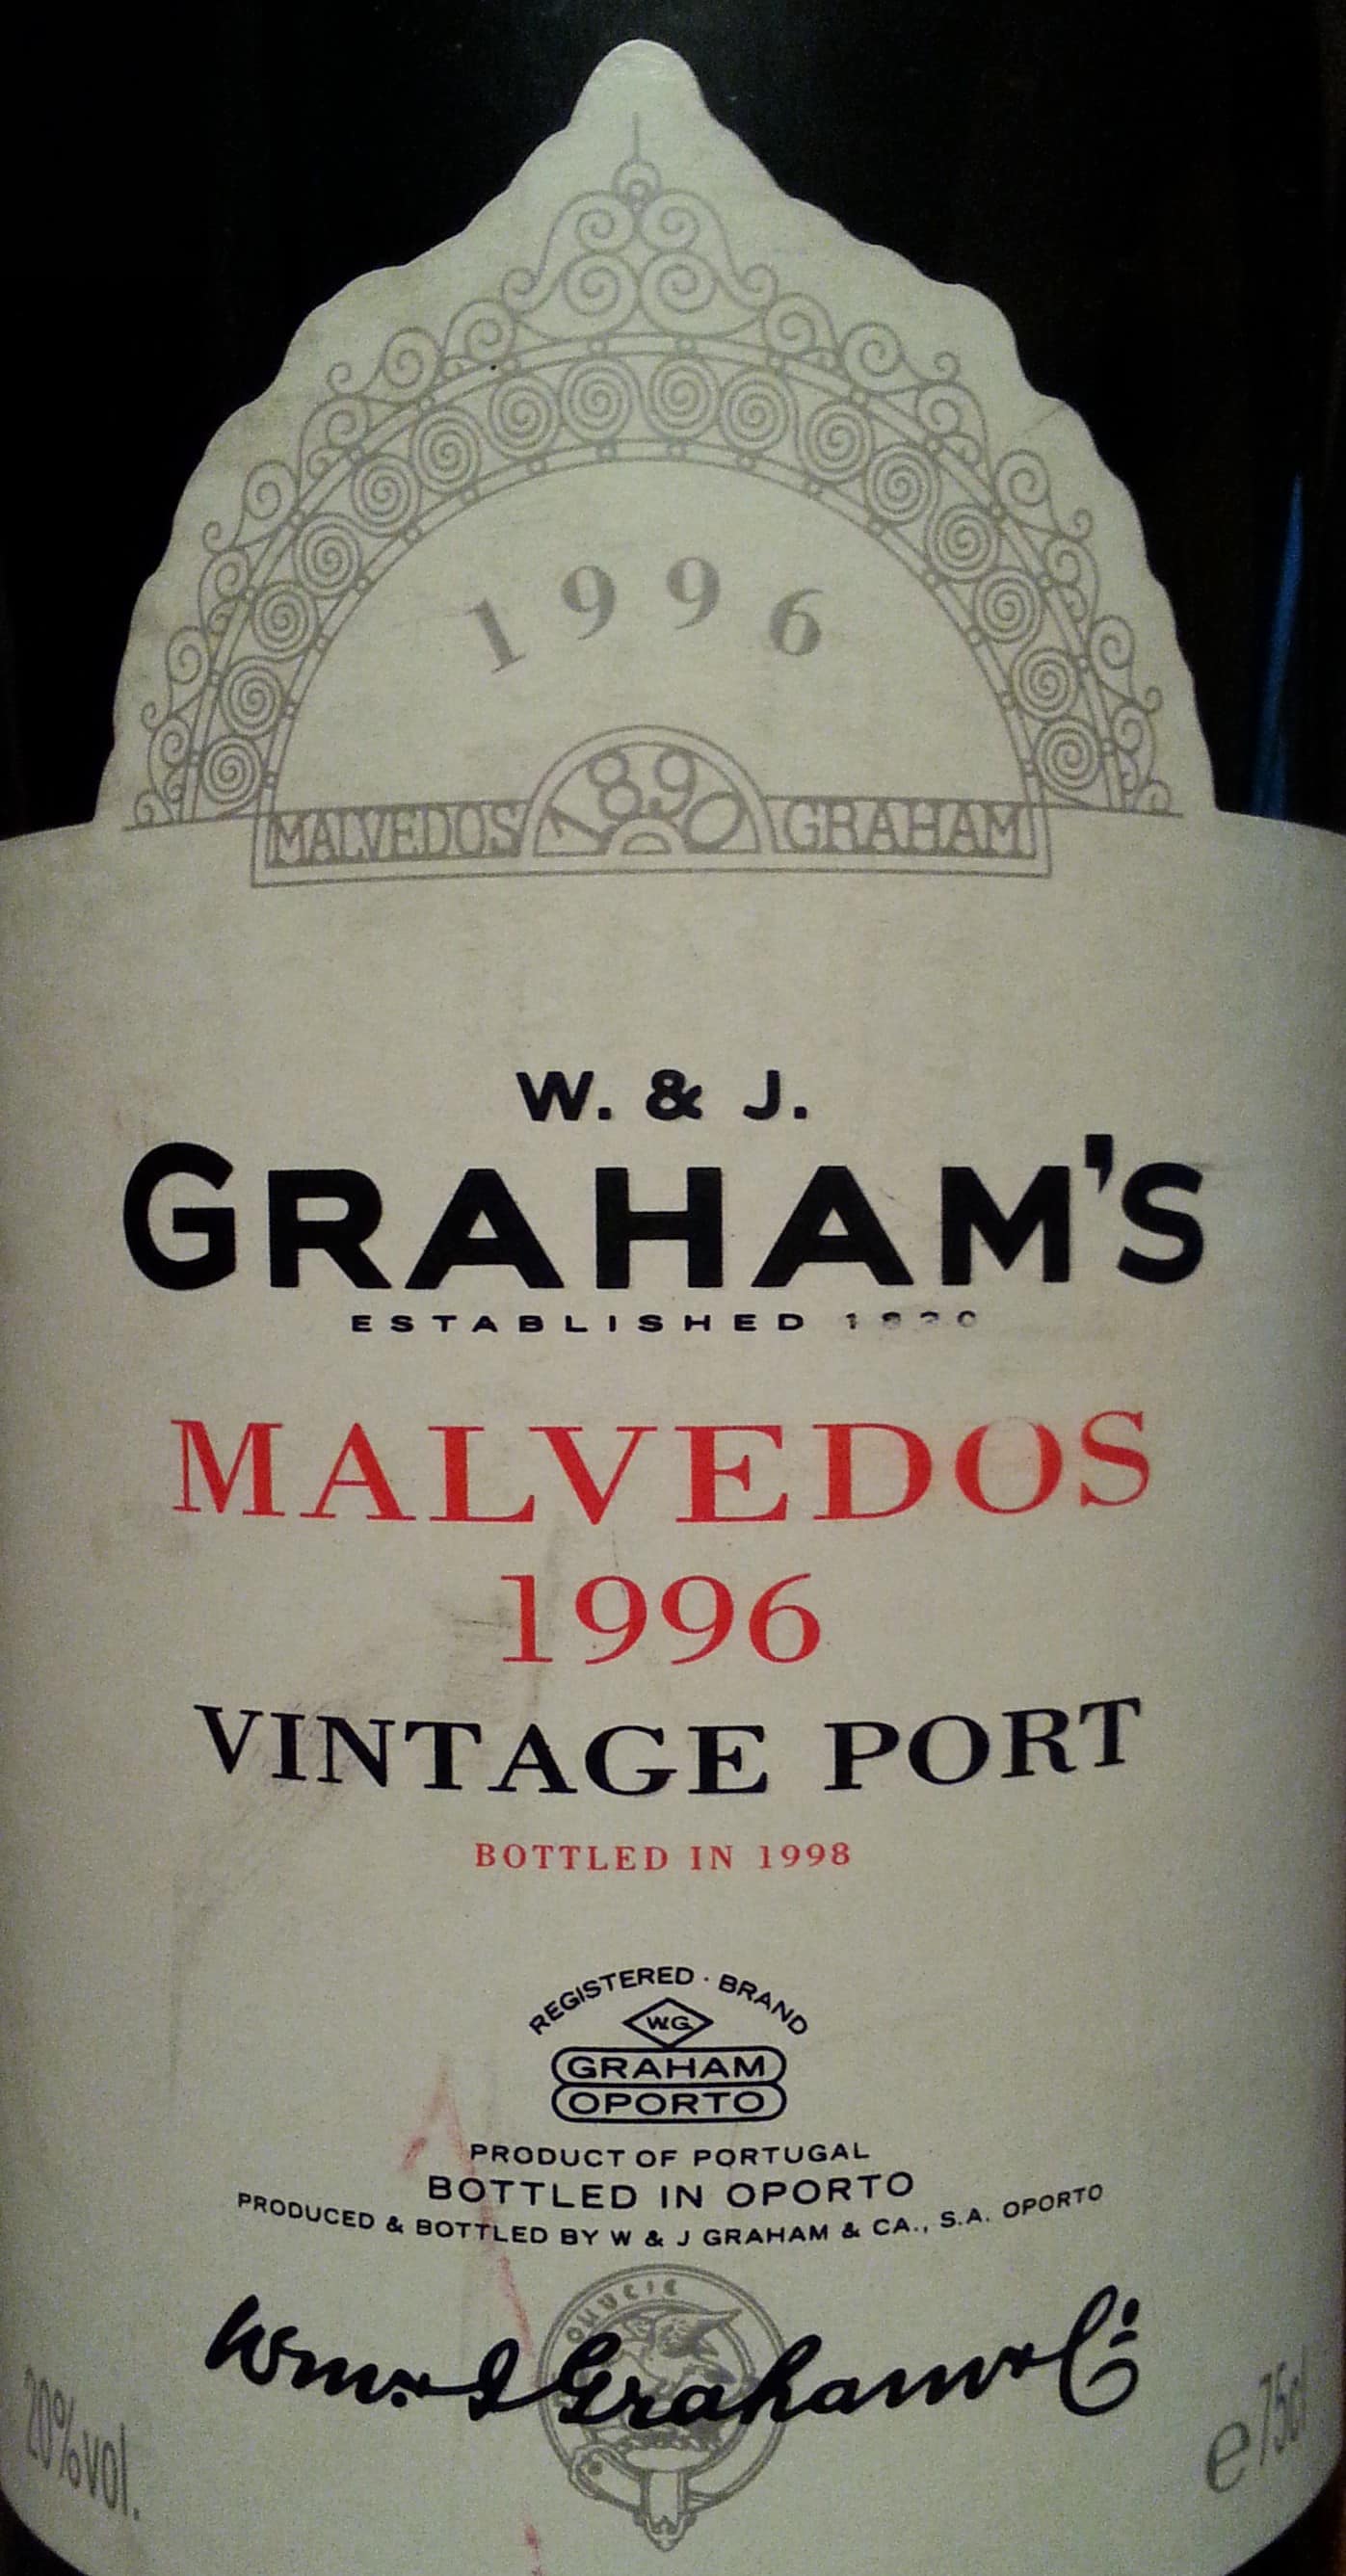 Graham’s Malvedos 1996 Vintage Port